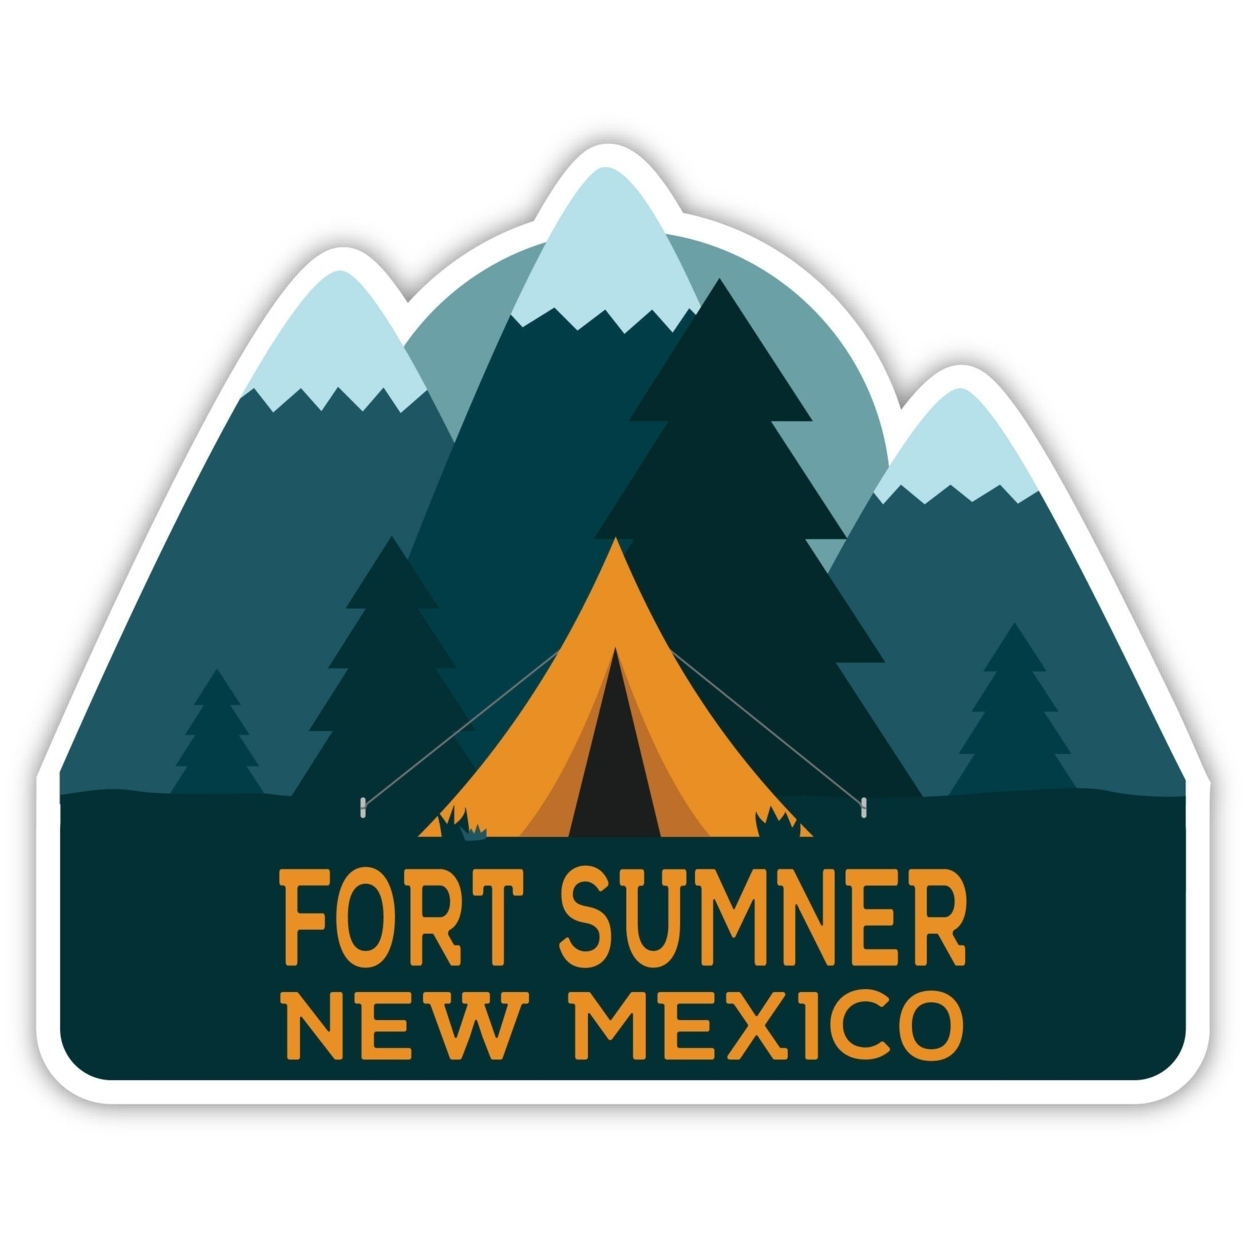 Fort Sumner New Mexico Souvenir Decorative Stickers (Choose Theme And Size) - Single Unit, 4-Inch, Tent